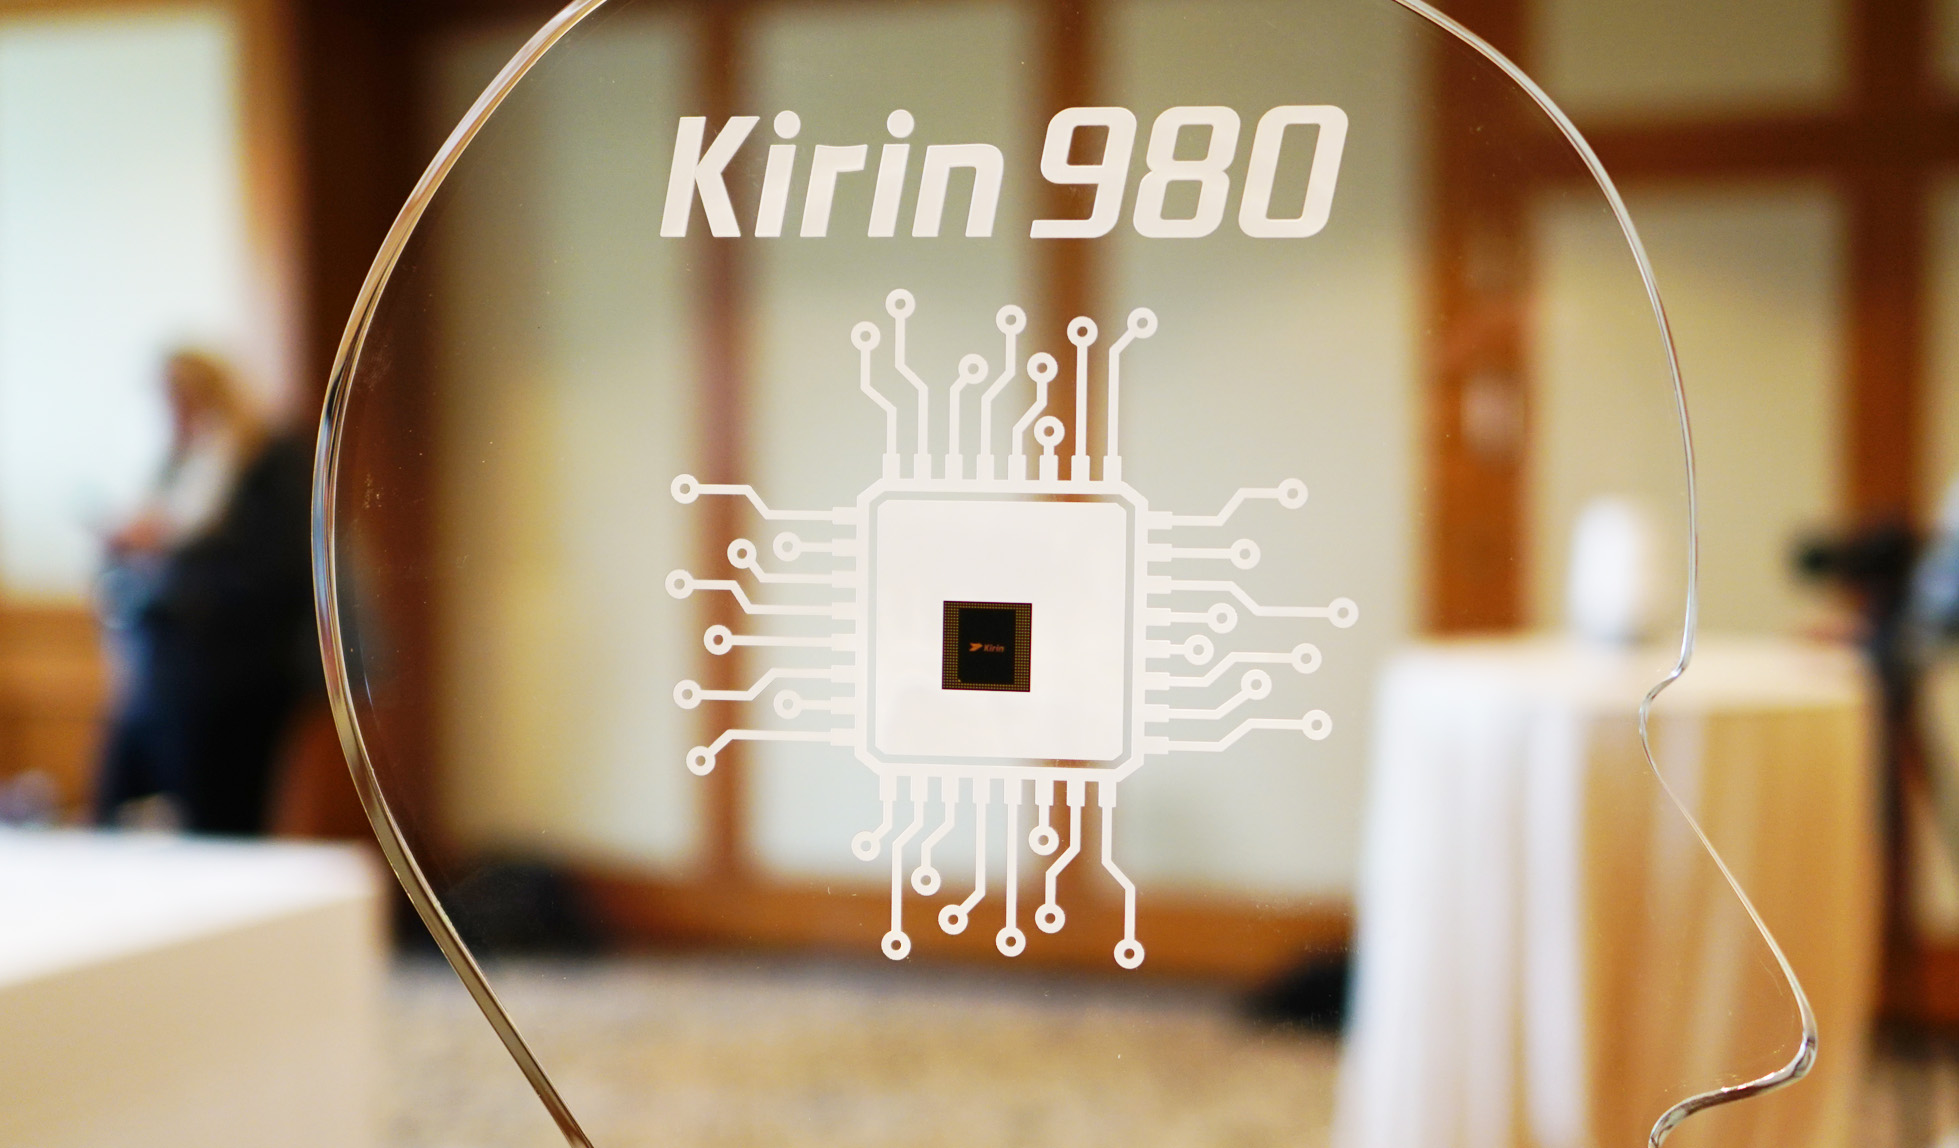 Huawei Kirin 980 chip in a glass case